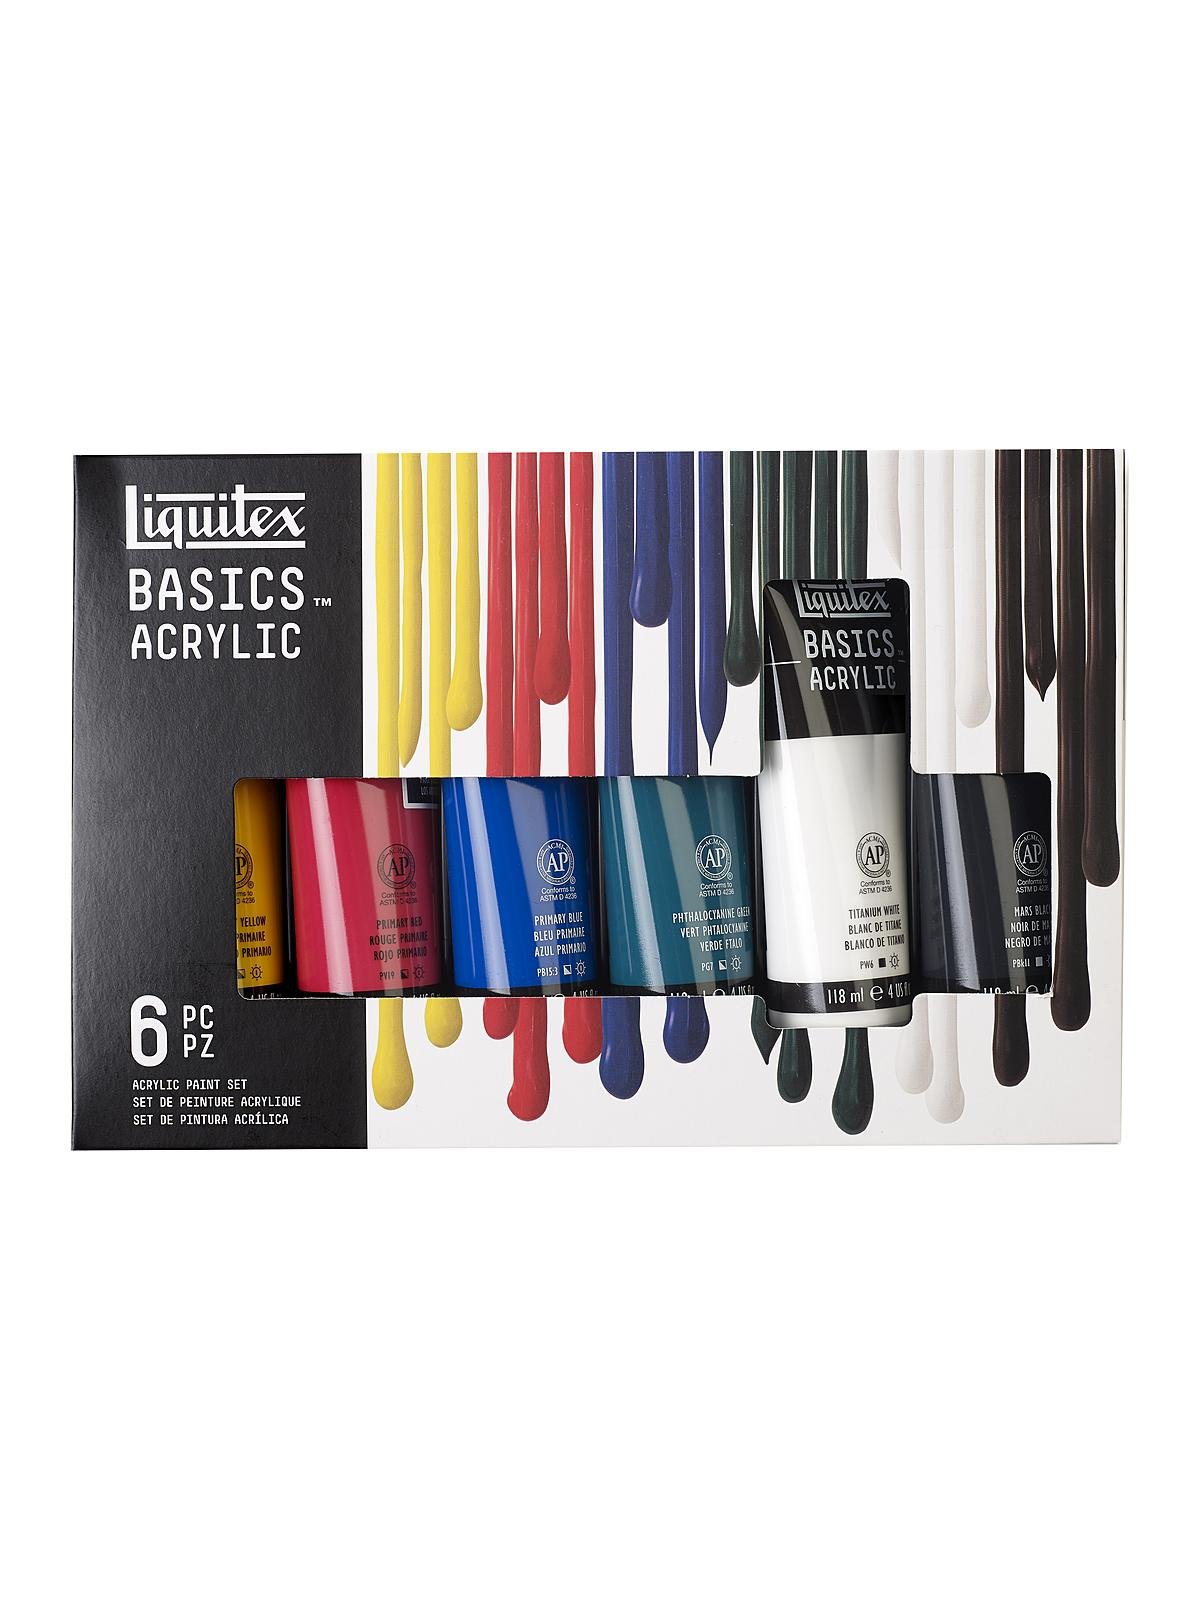 Liquitex BASICS Acrylic Paint Set, 48 x 22ml (0.74-oz) Tube Set